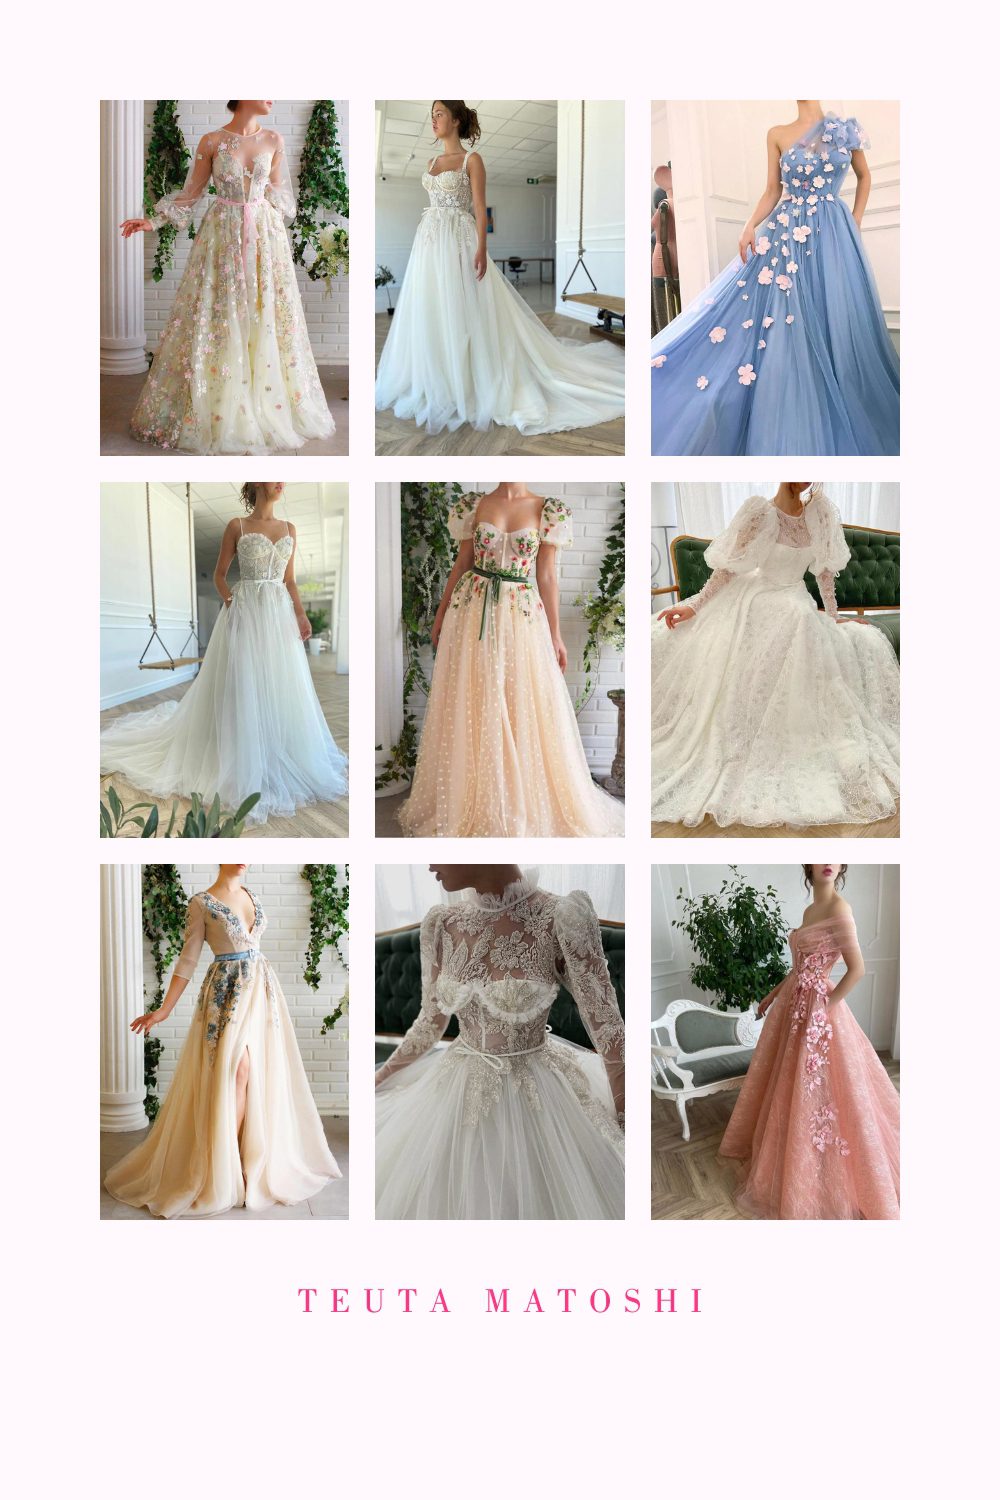 Stunning Photos of Wedding Dresses From Around the World